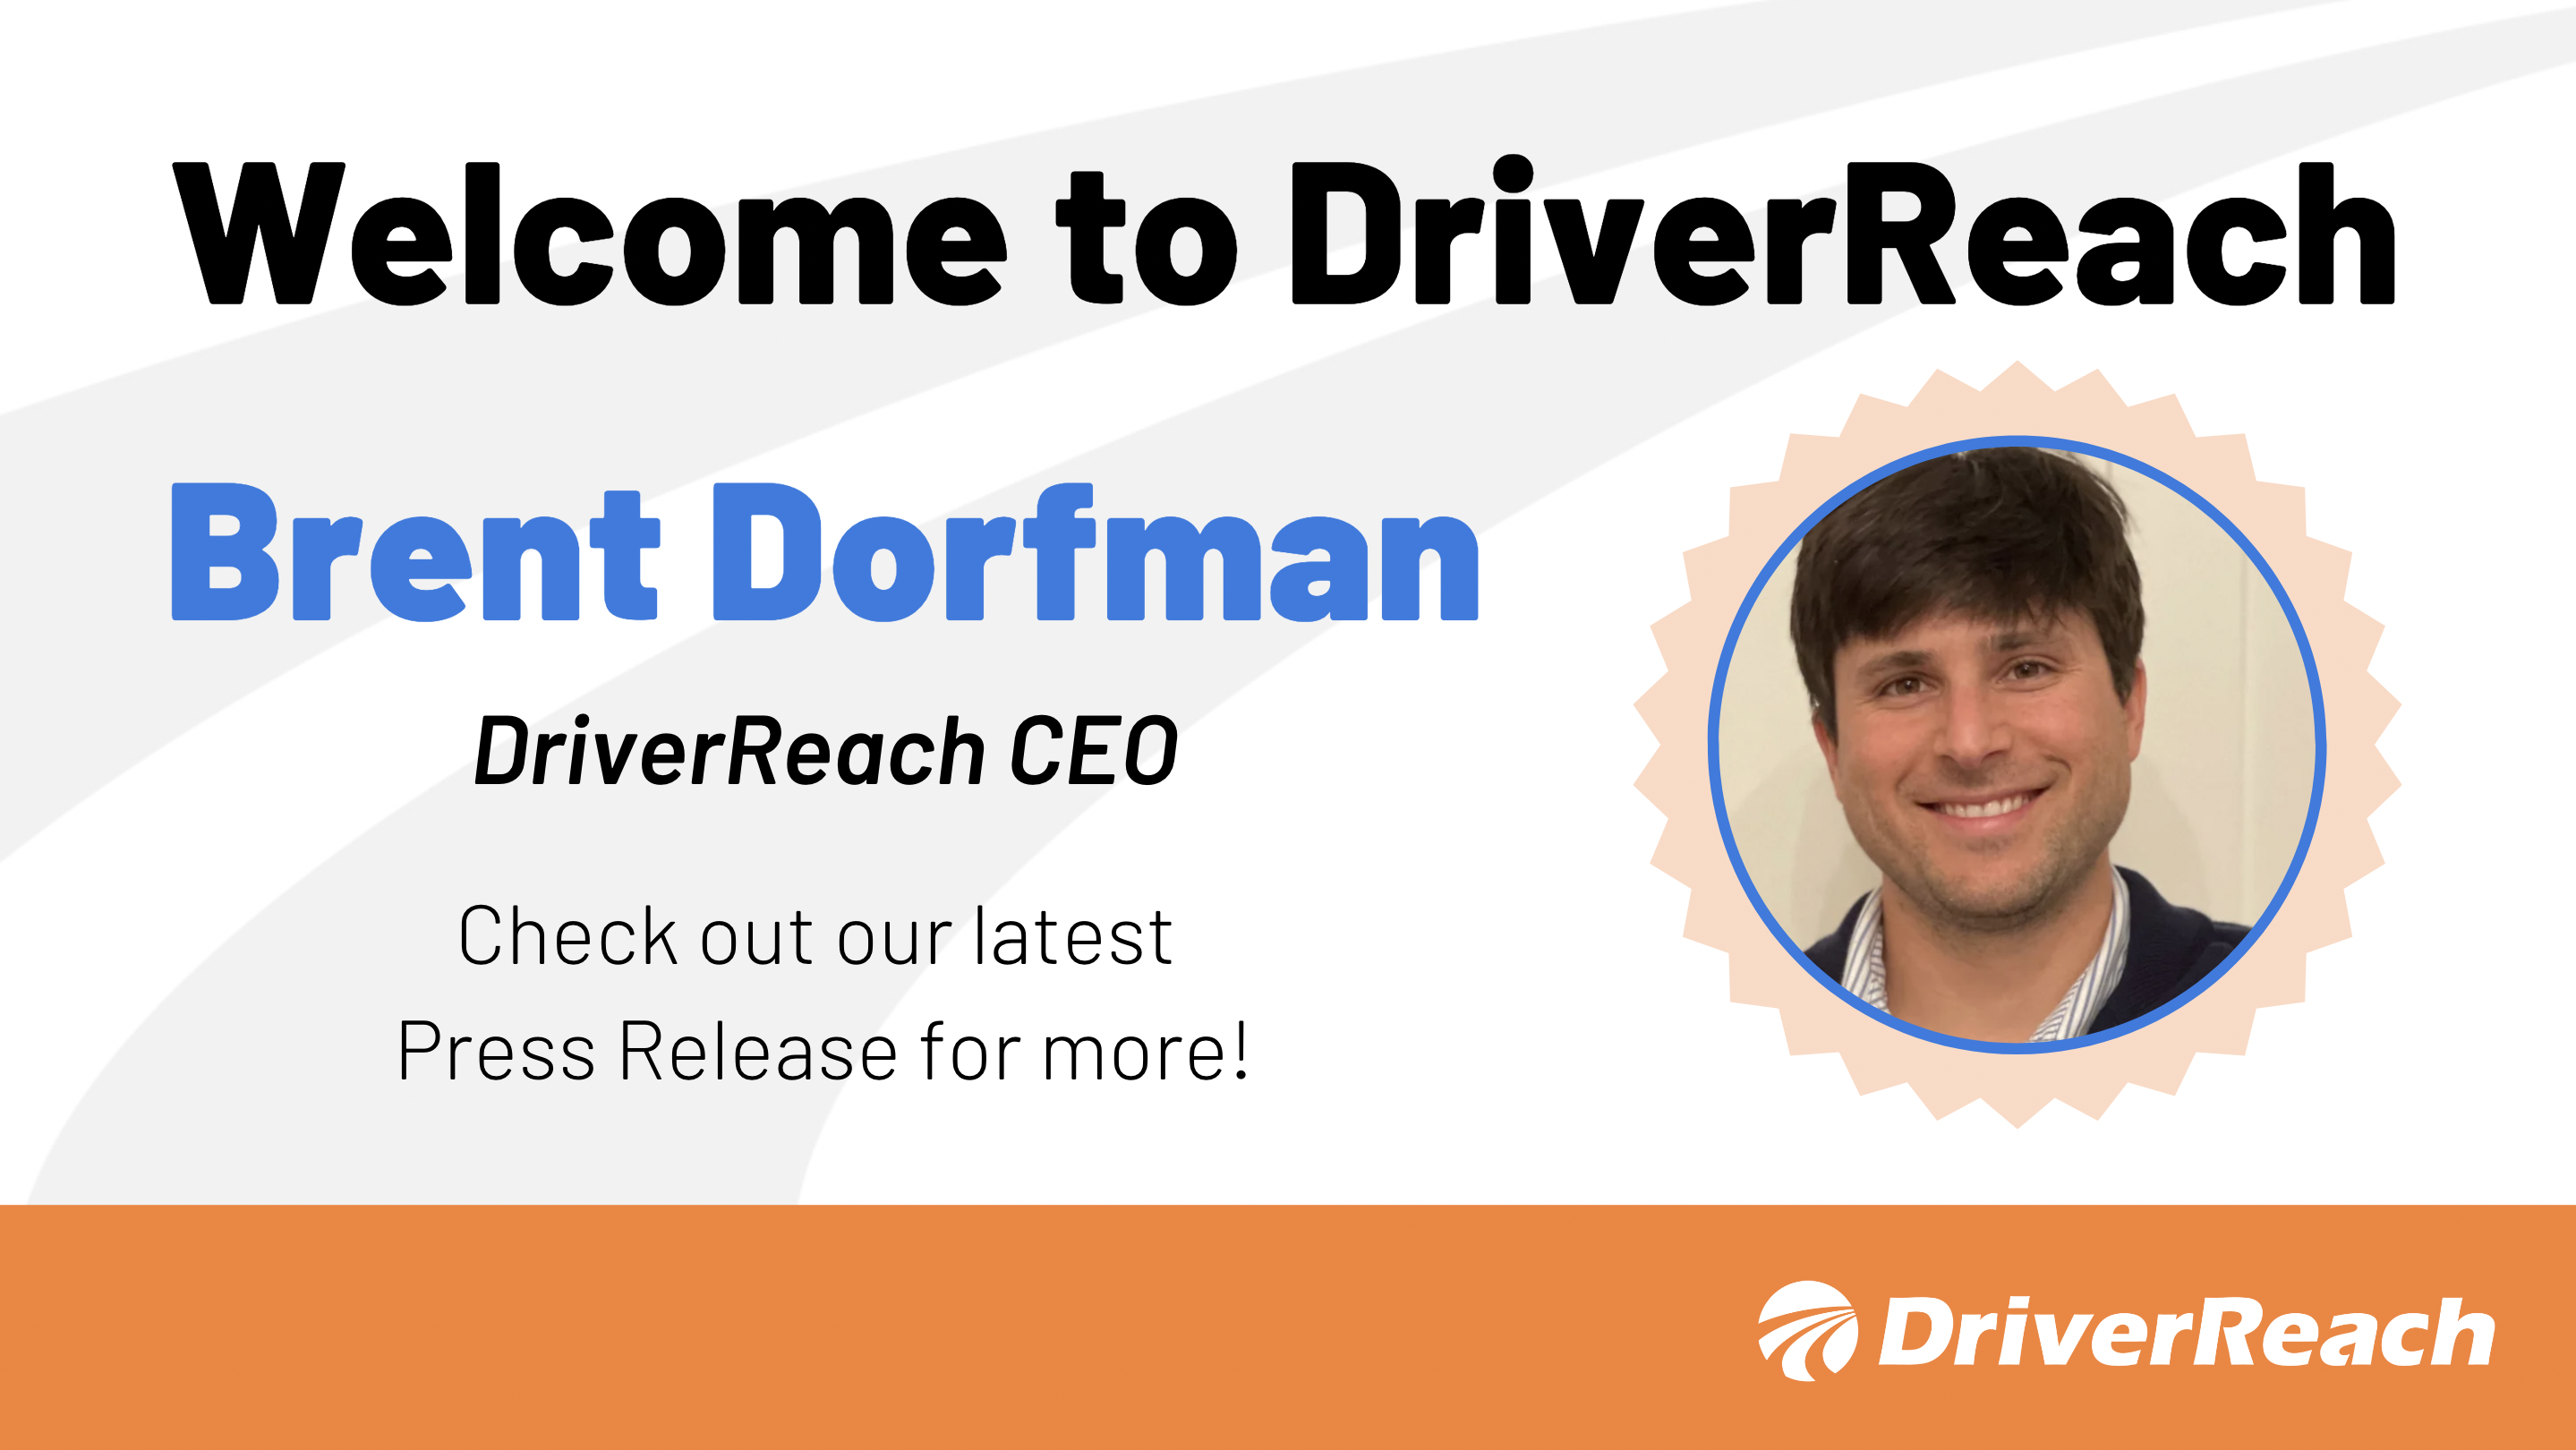 DriverReach Appoints Brent Dorfman as CEO 